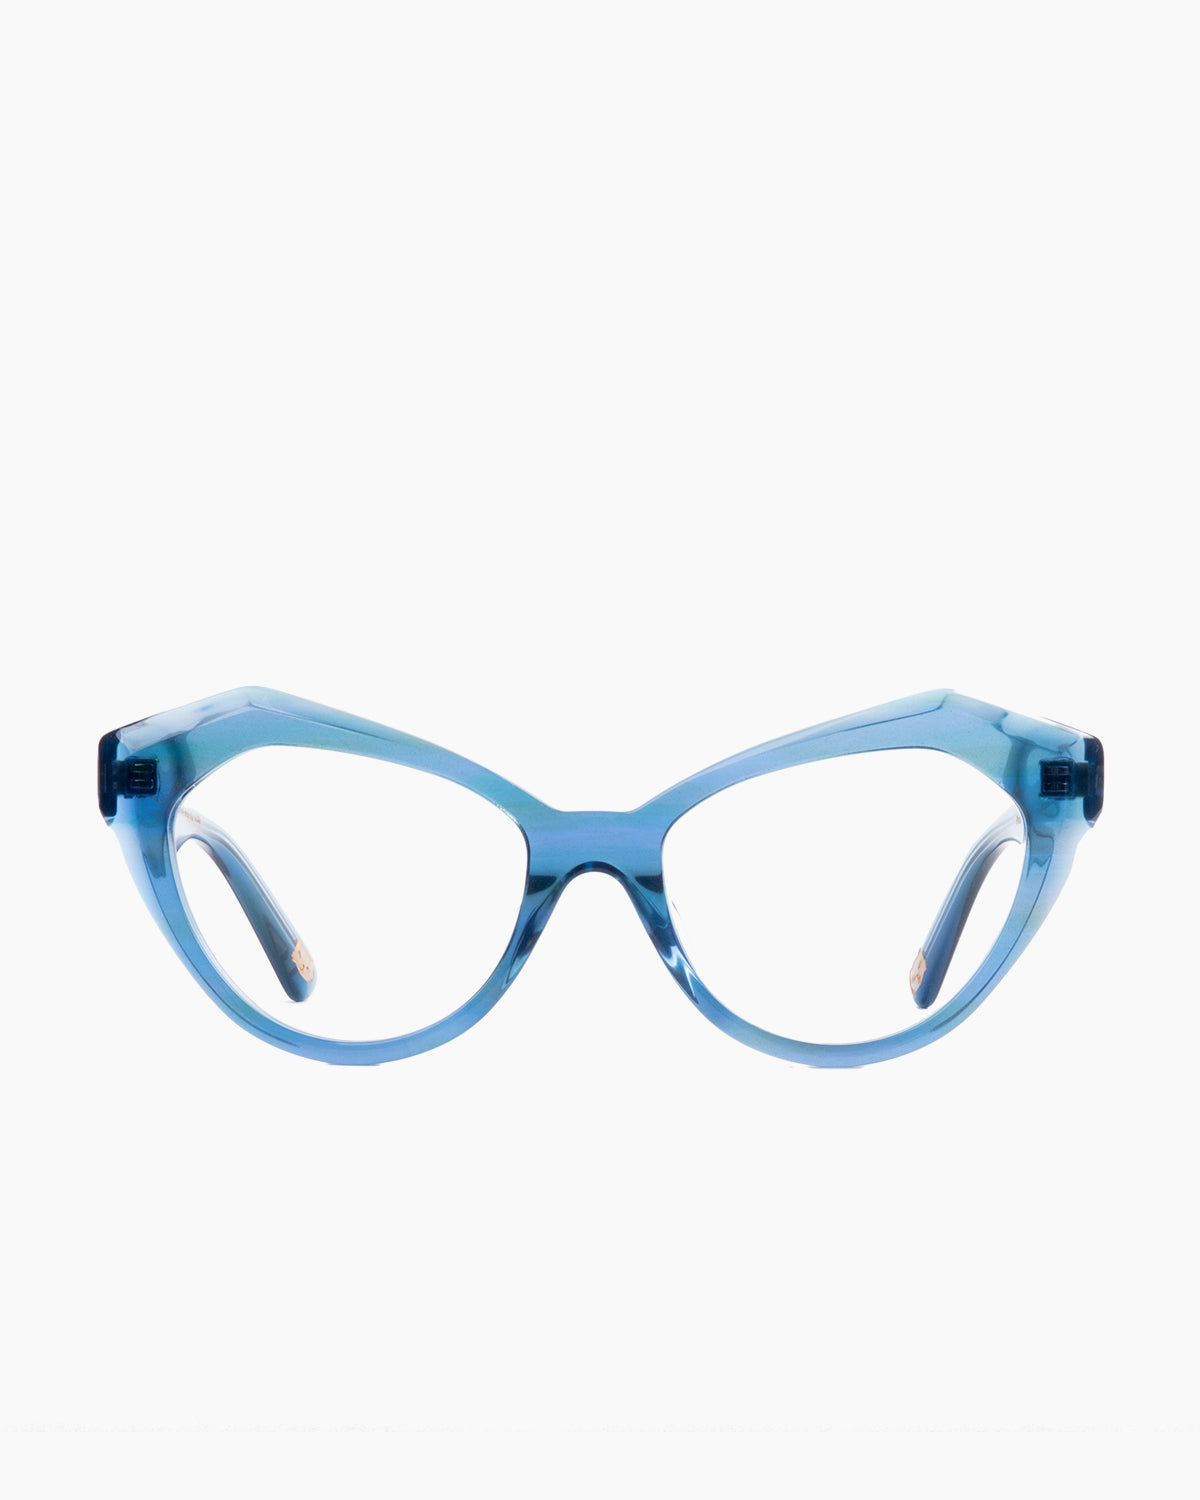 Spectacleeyeworks - Ayalah - c456 | glasses bar:  Marie-Sophie Dion